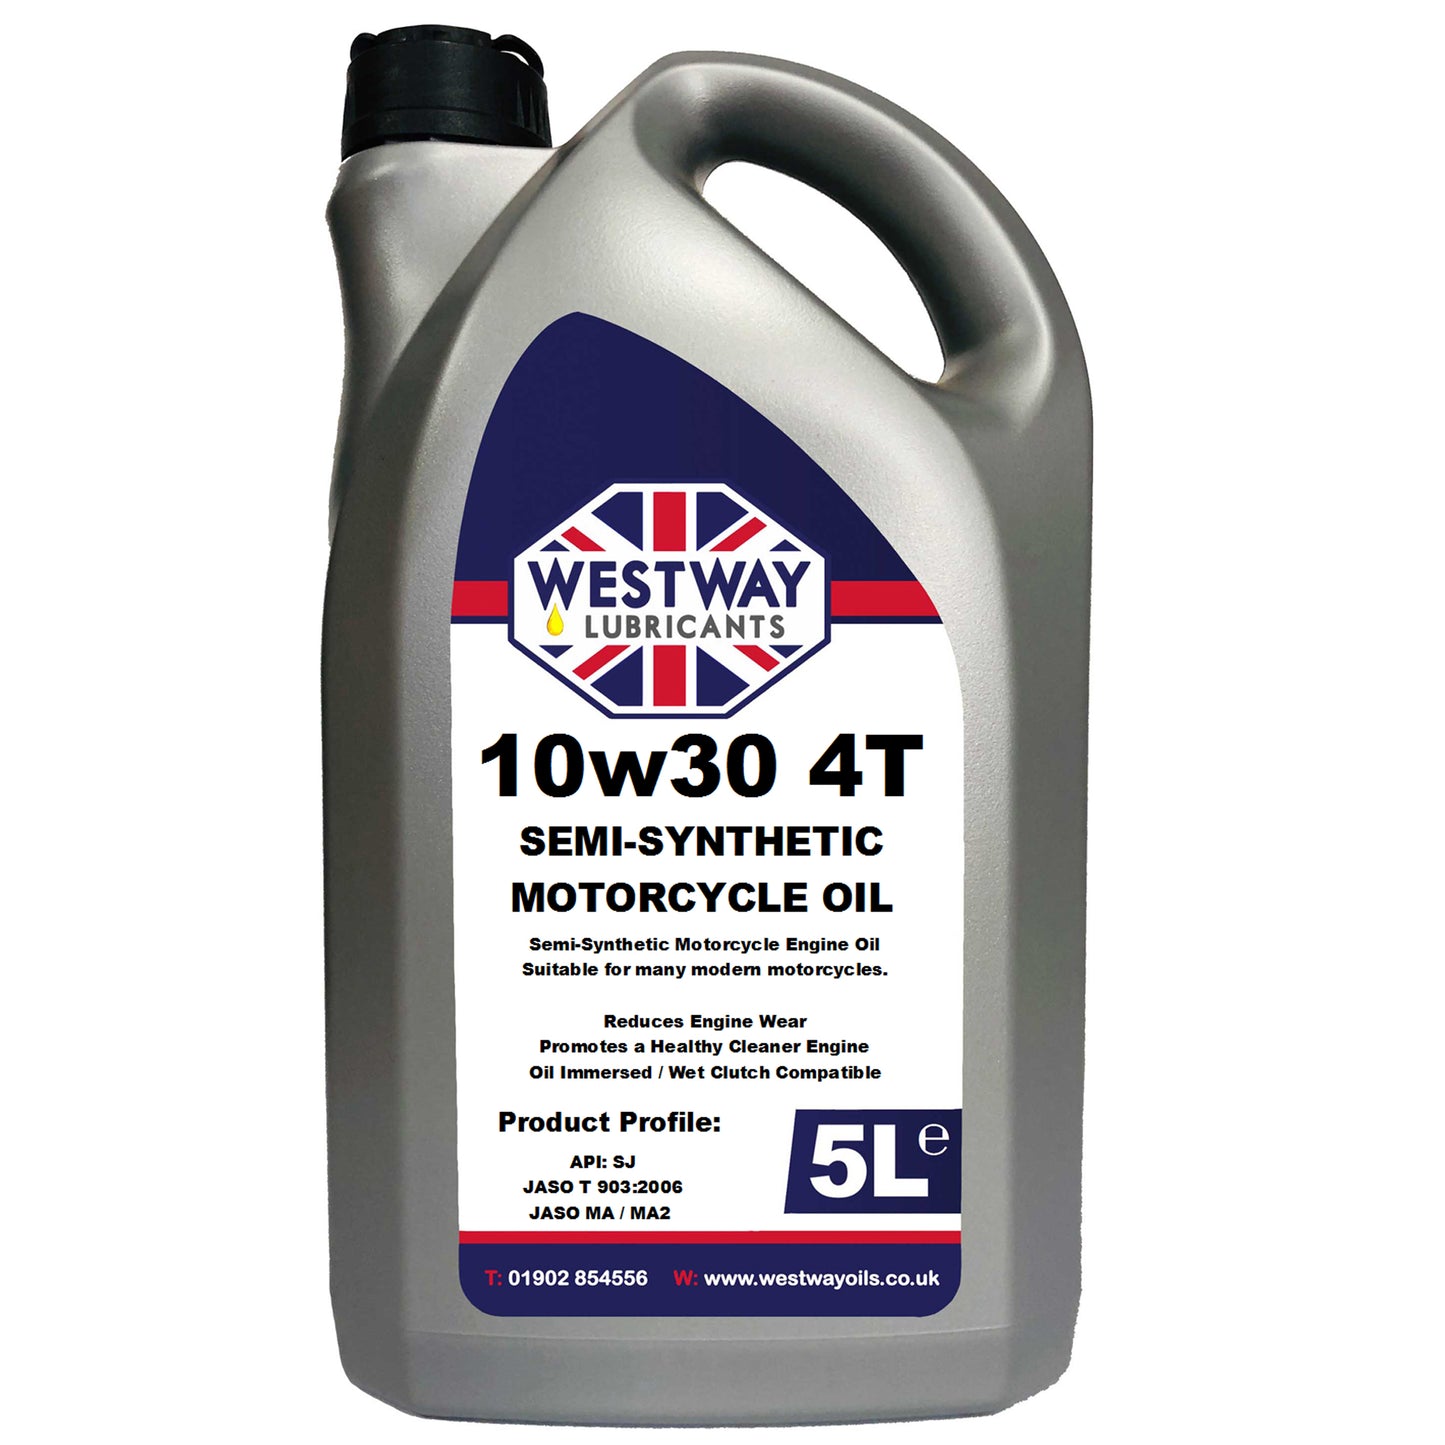 10w30 4T Semi-Synthetic Motorcycle Oil